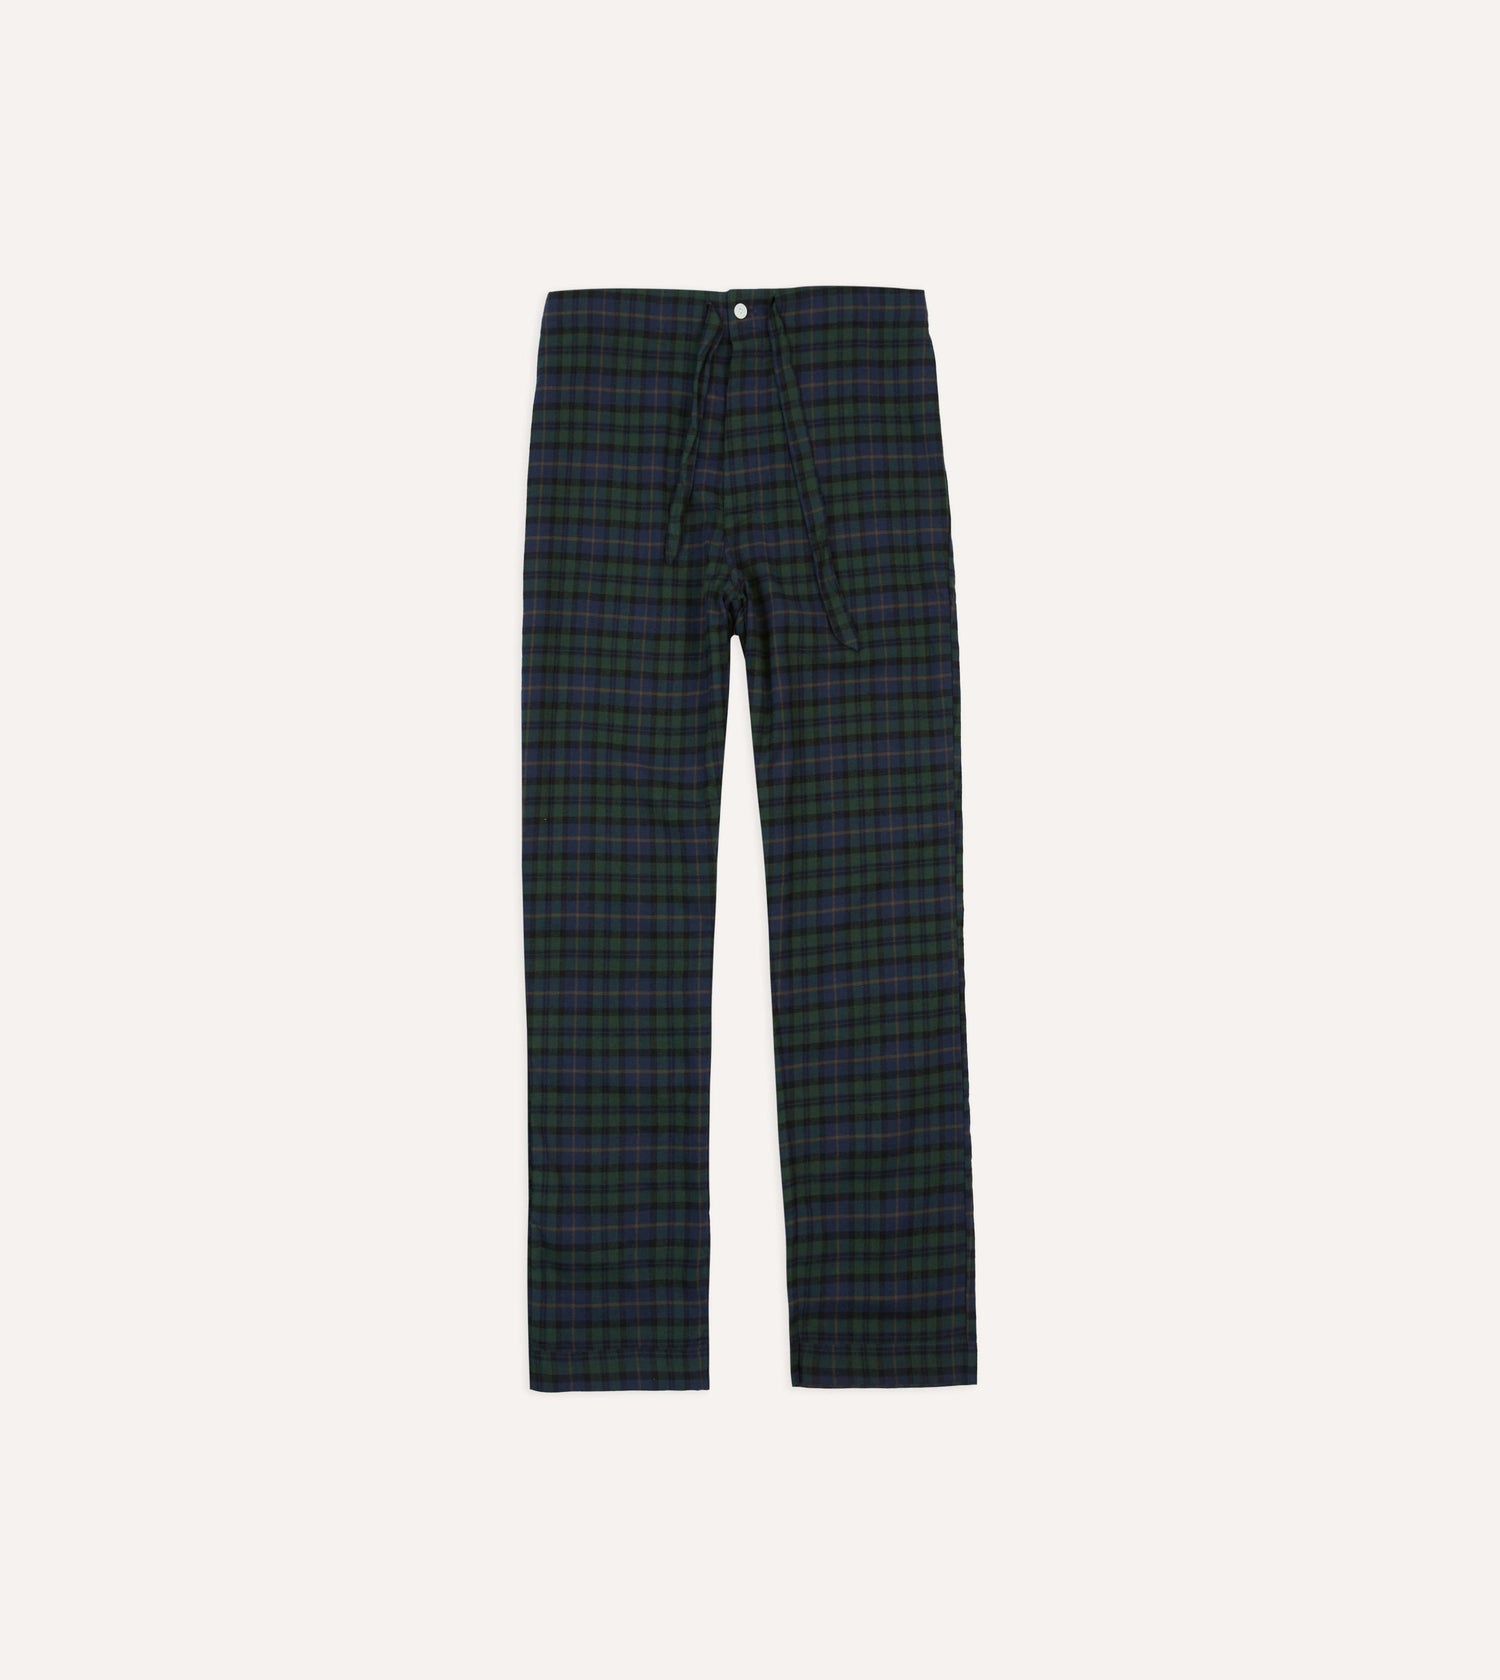 Green and Navy Check Cotton Pyjama Set